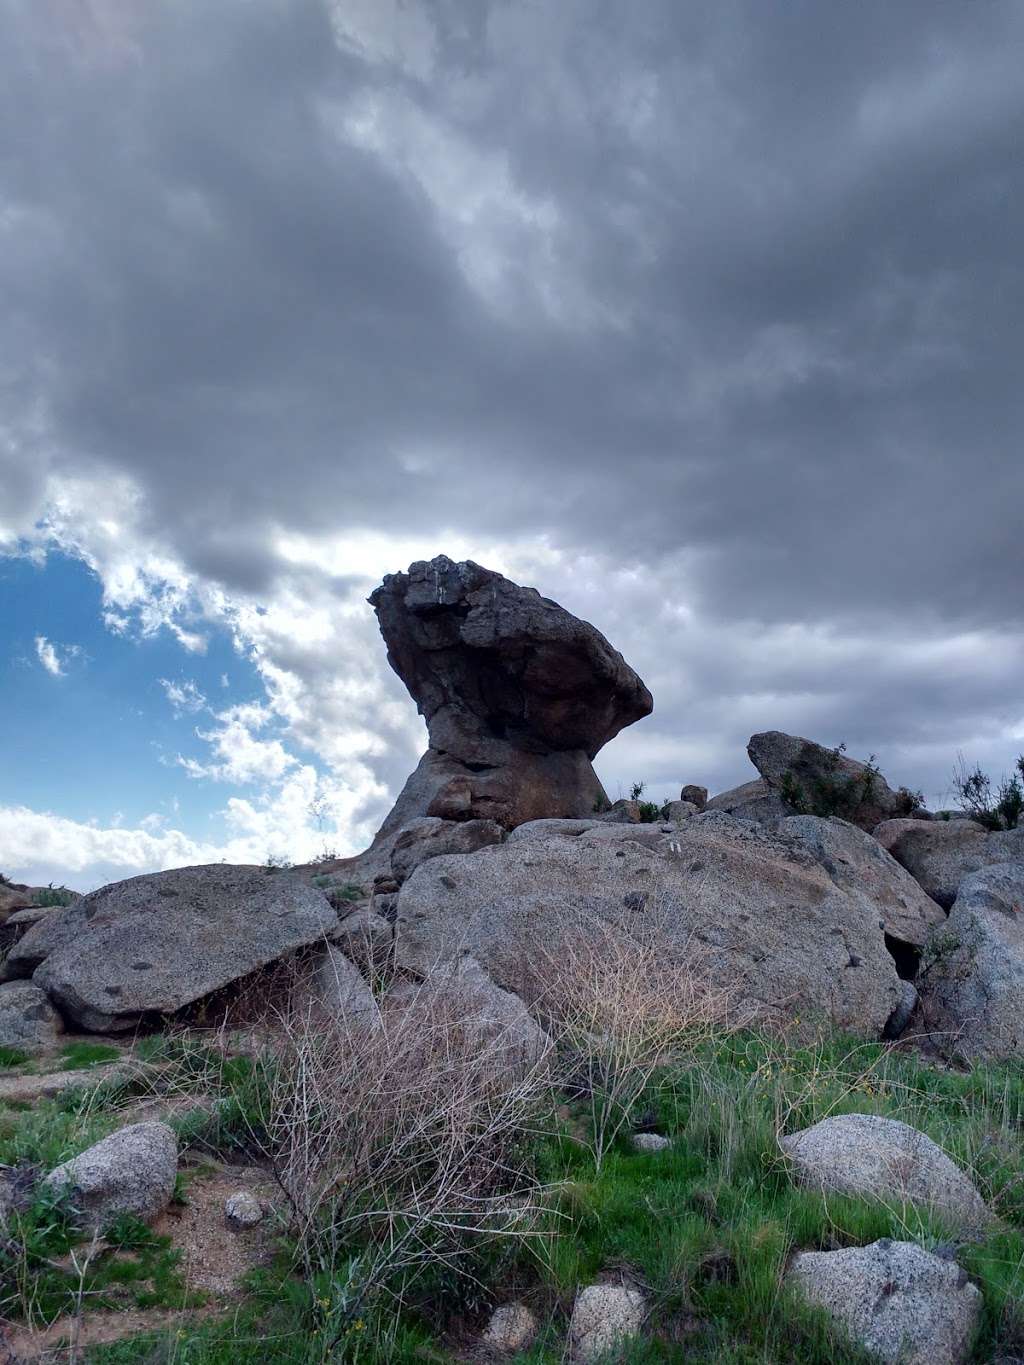 The Coppermine, AKA "The Rock" | Perris, CA 92570, USA